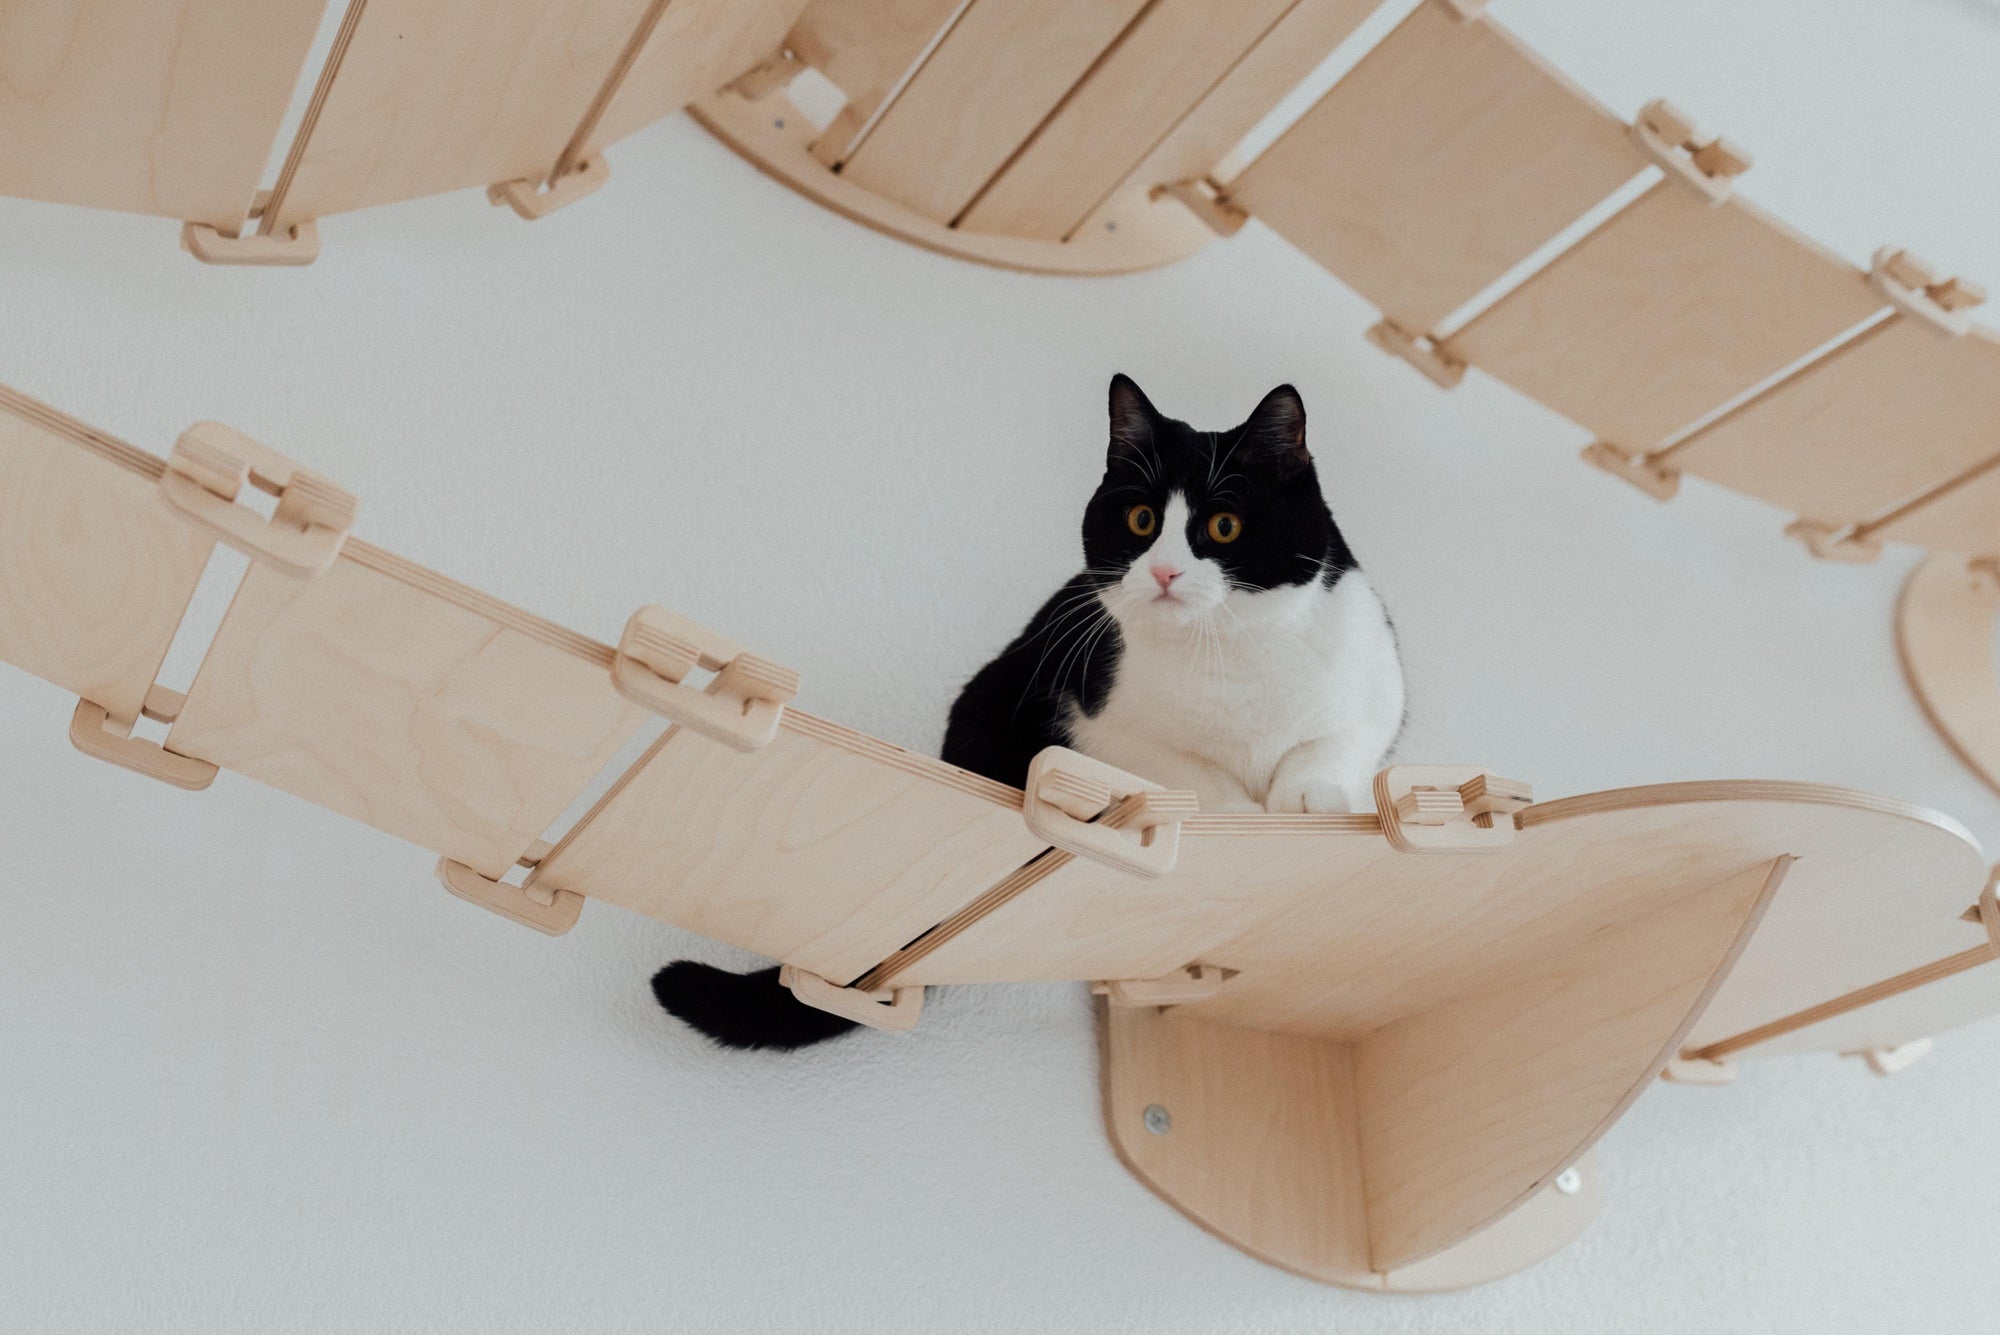 How to Make a Homemade Cat House